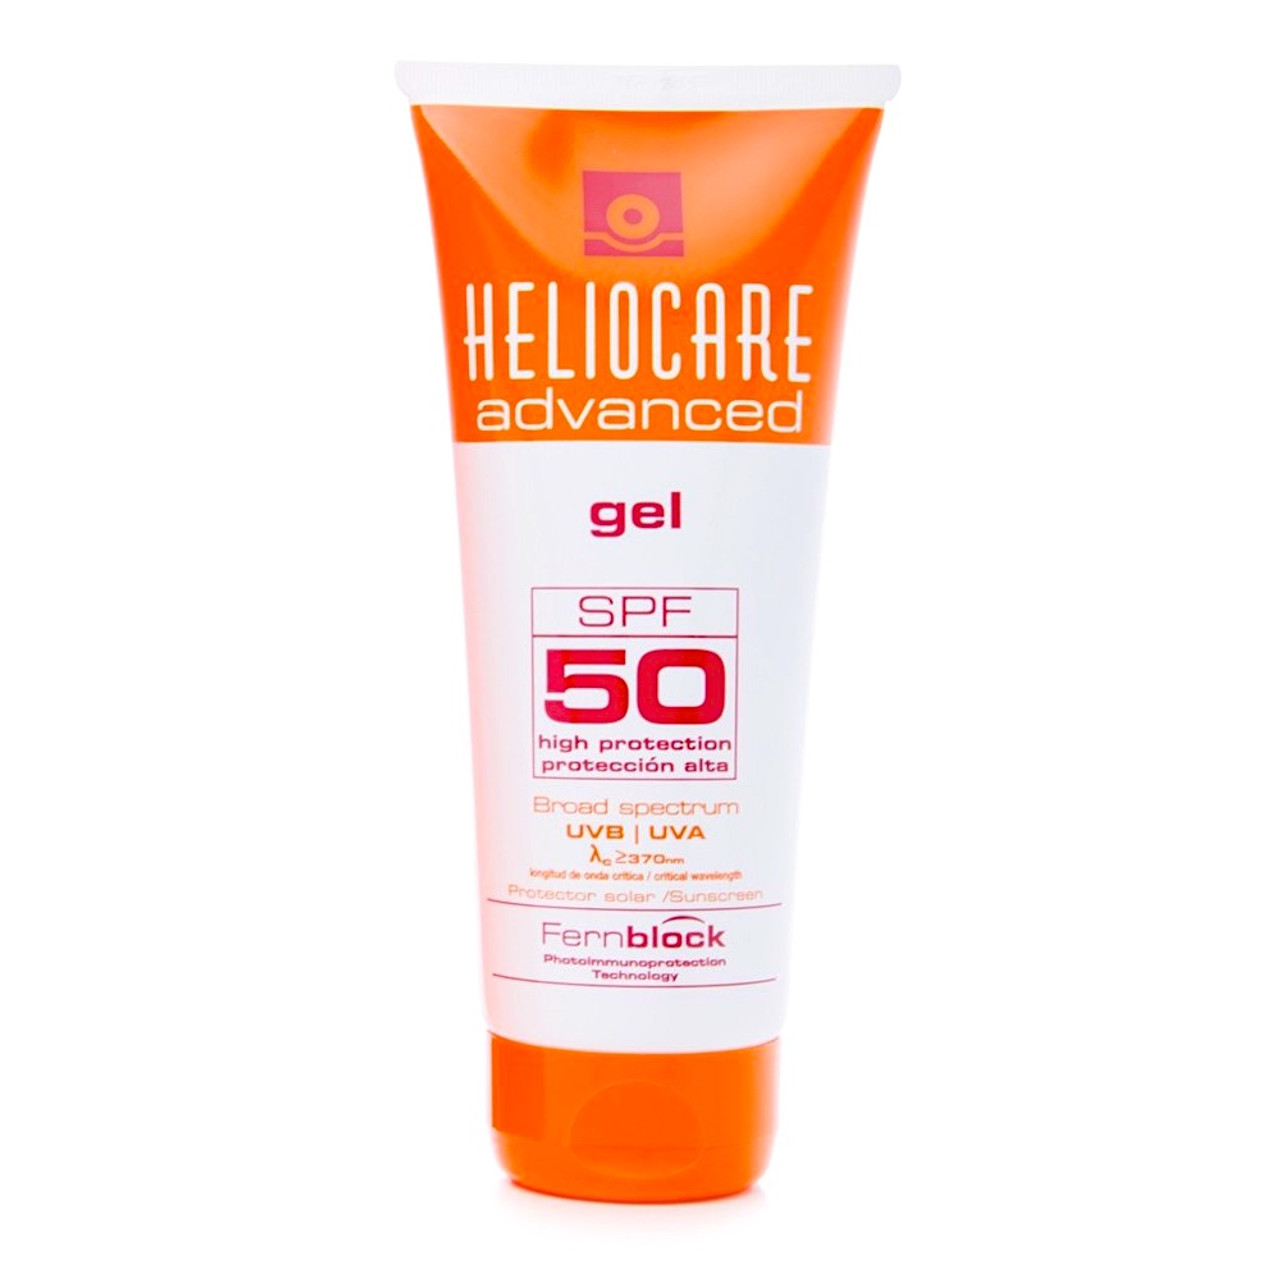 Advanced gel. СПФ Heliocare. Heliocare SPF 50 вся линейка. Heliocare Color Compact SPF 50 Sunscreen. Heliocare SPF 50.